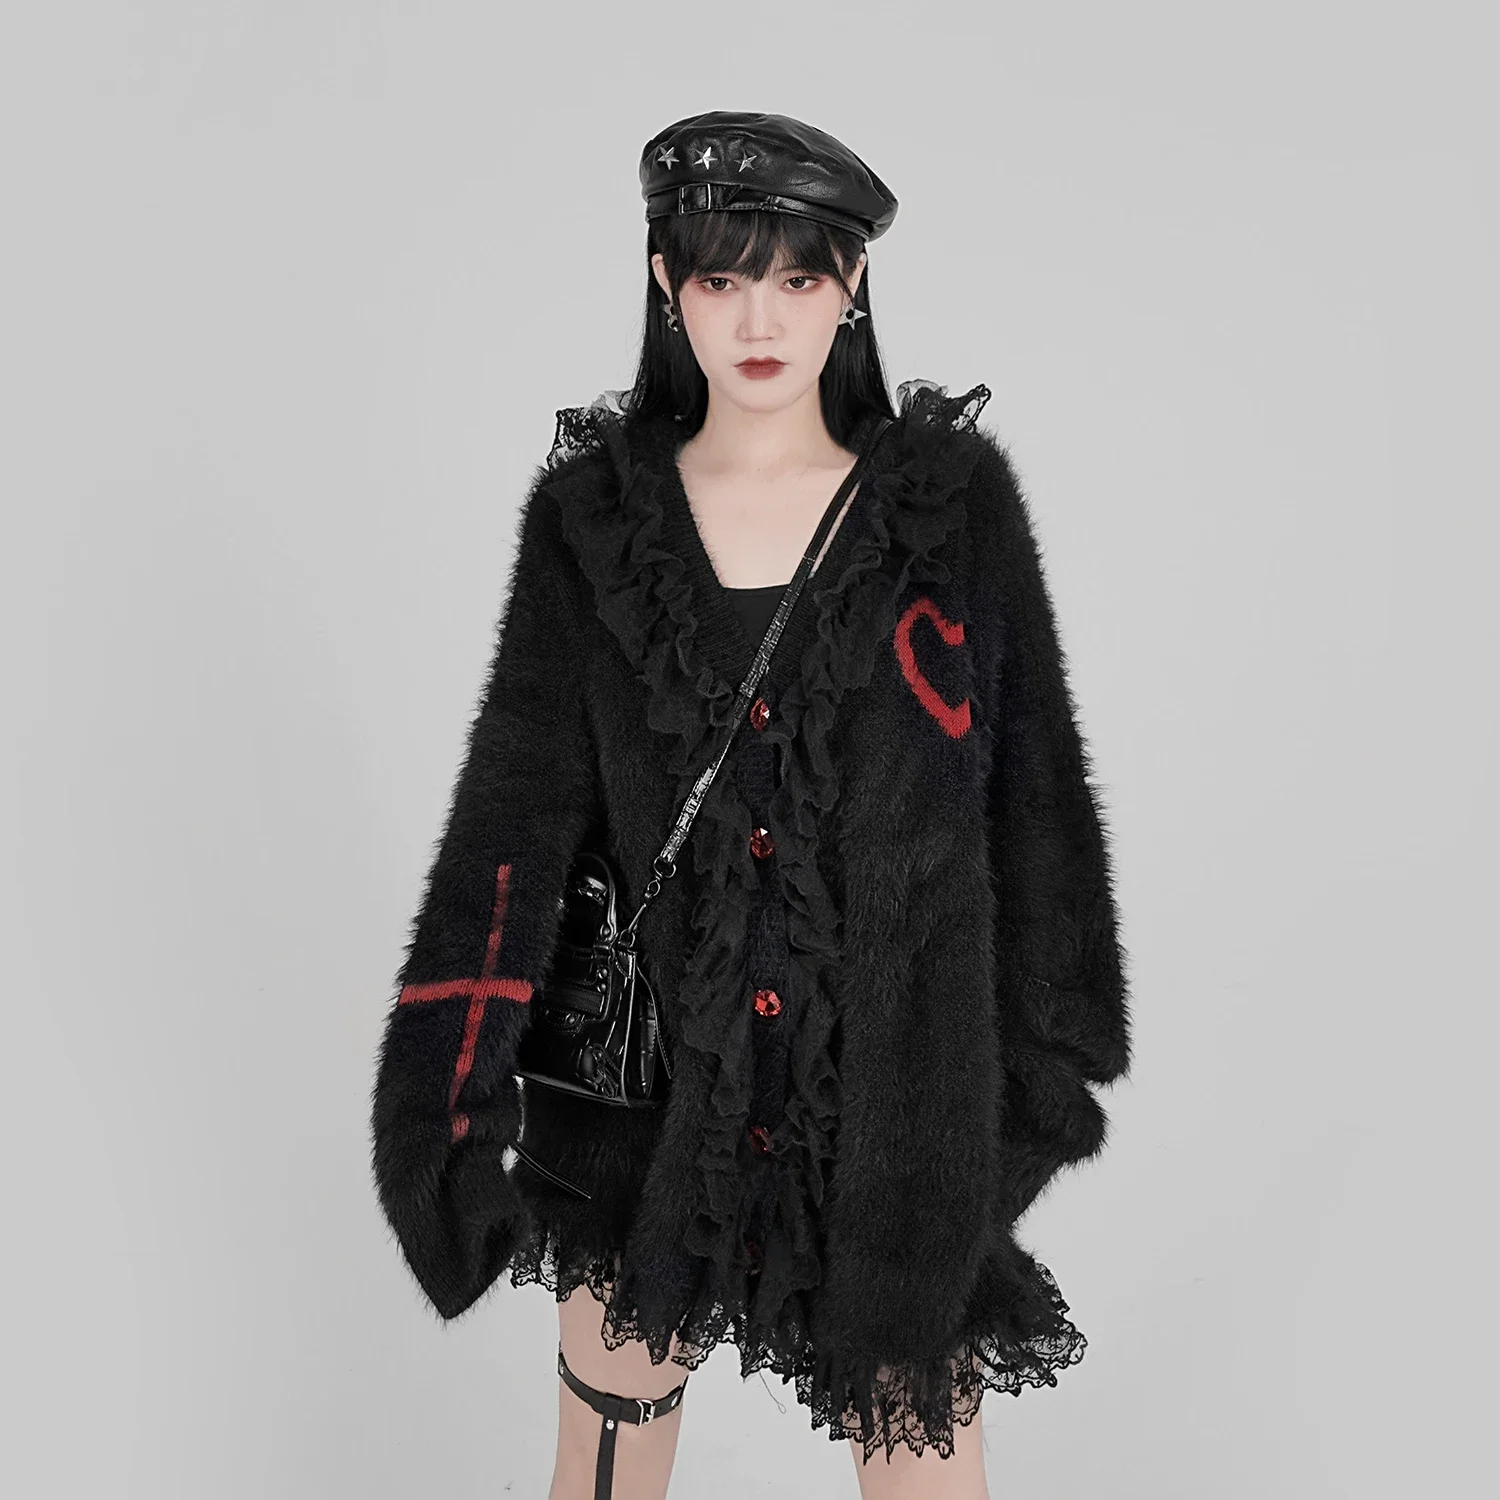 New Autumn Winter Harajuku Cross Love Lace V-neck Black Kawaii Hot Girl Loose Long Sleeve Thick Fashion Sweet Knitting Coat